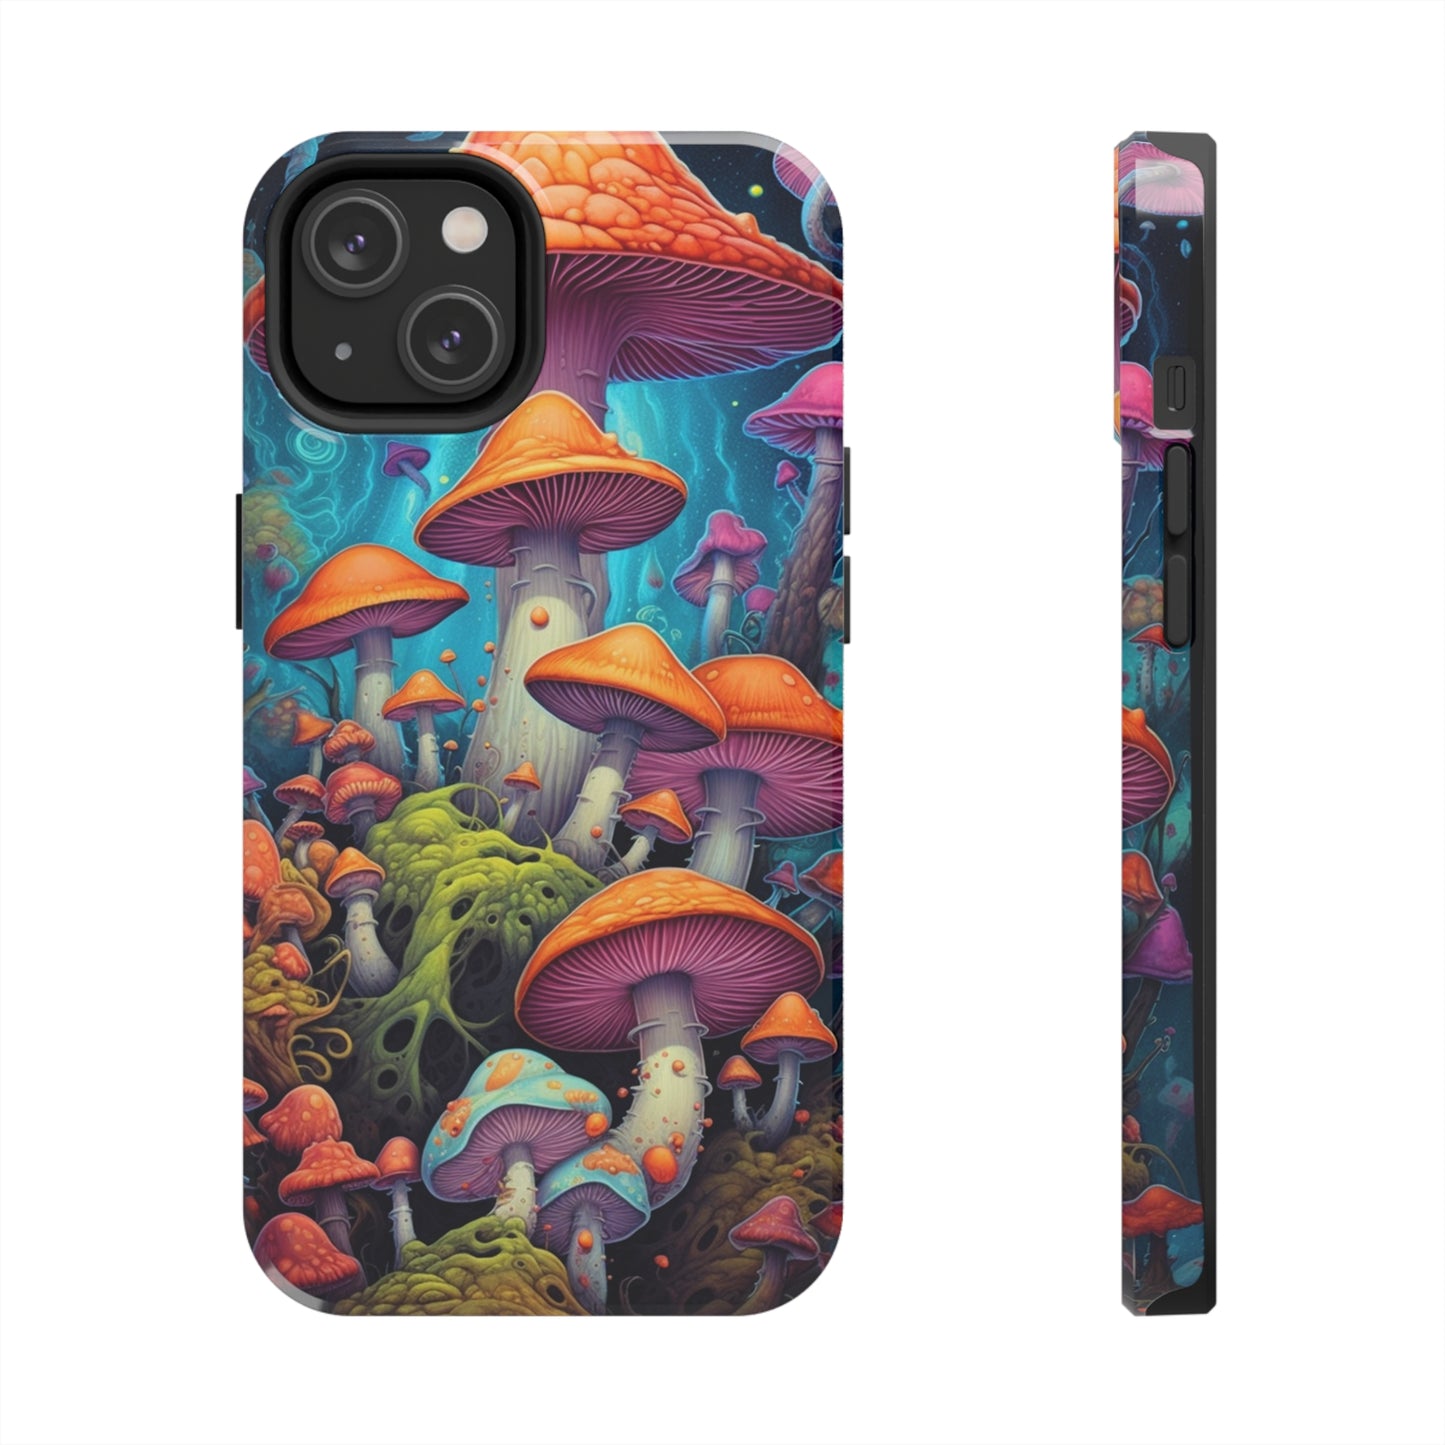 Vibrant Phone Case with Trippy Mushroom Design